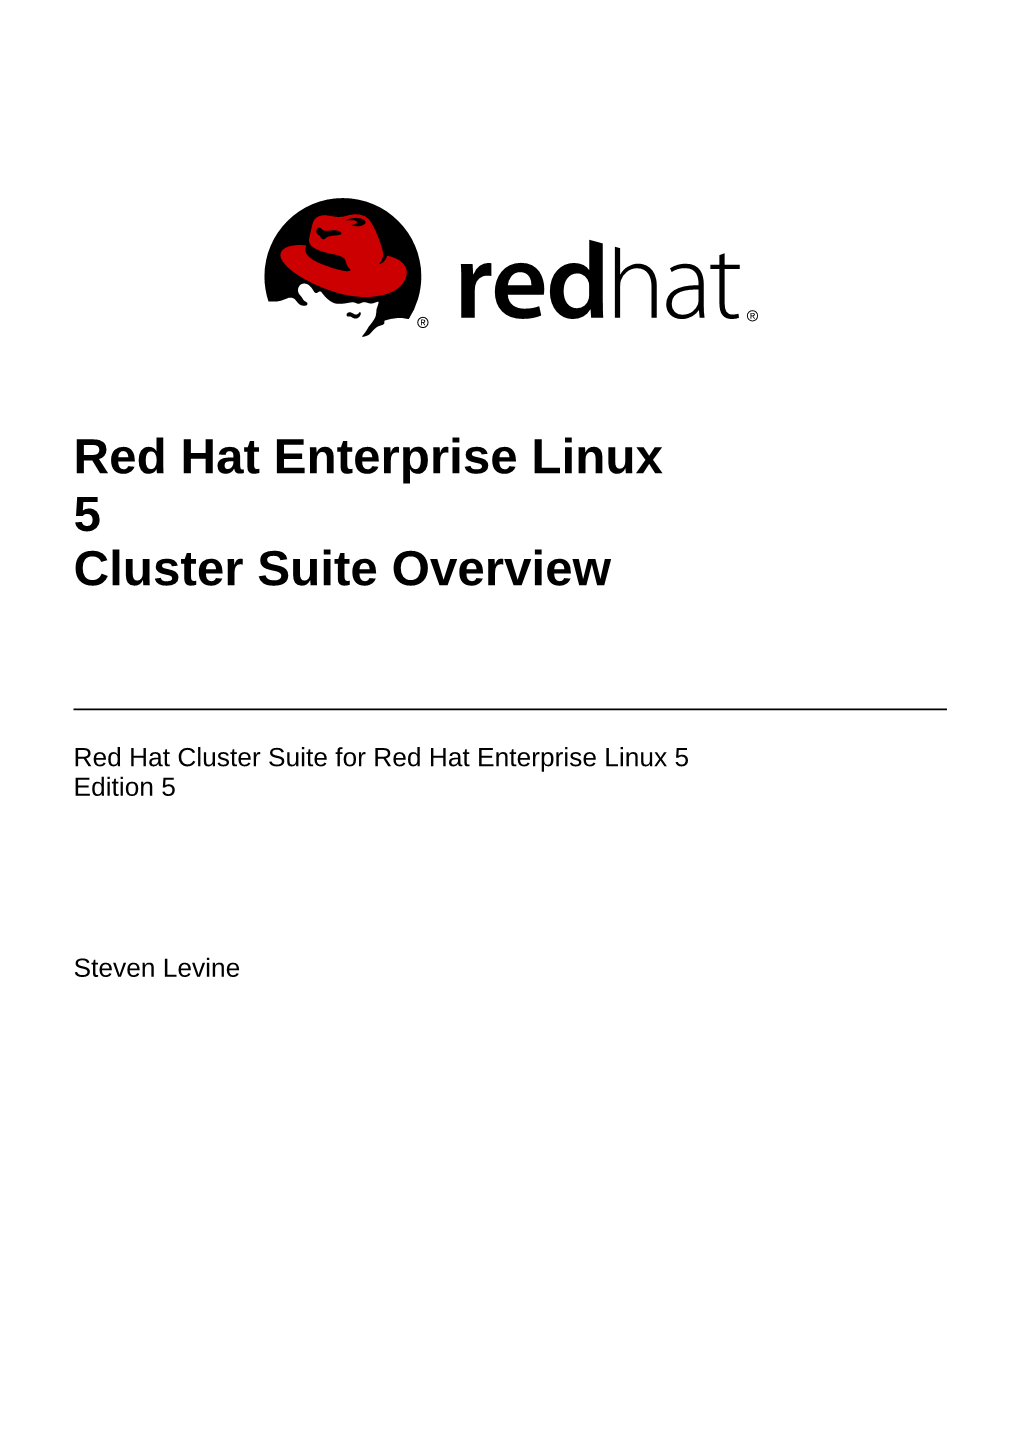 Red Hat Enterprise Linux 5 Cluster Suite Overview